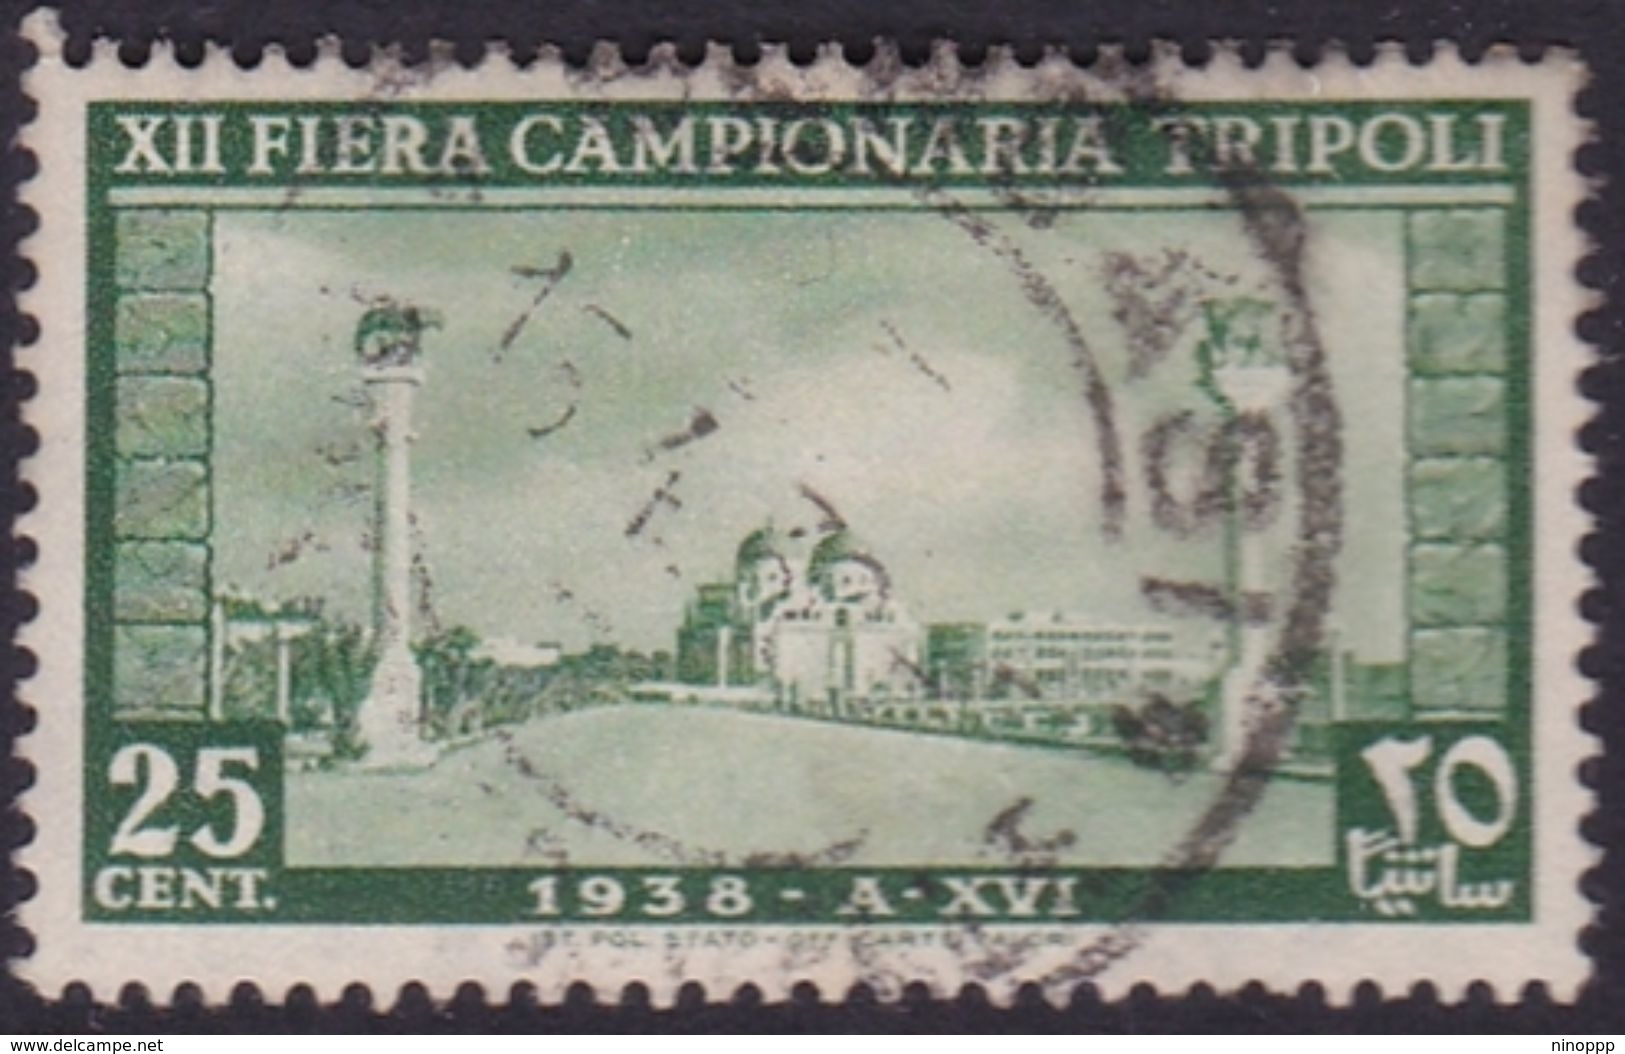 Italy-Colonies And Territories-Libya S 148 1938 12th Tripoli Fair,25c Green,used - Libya